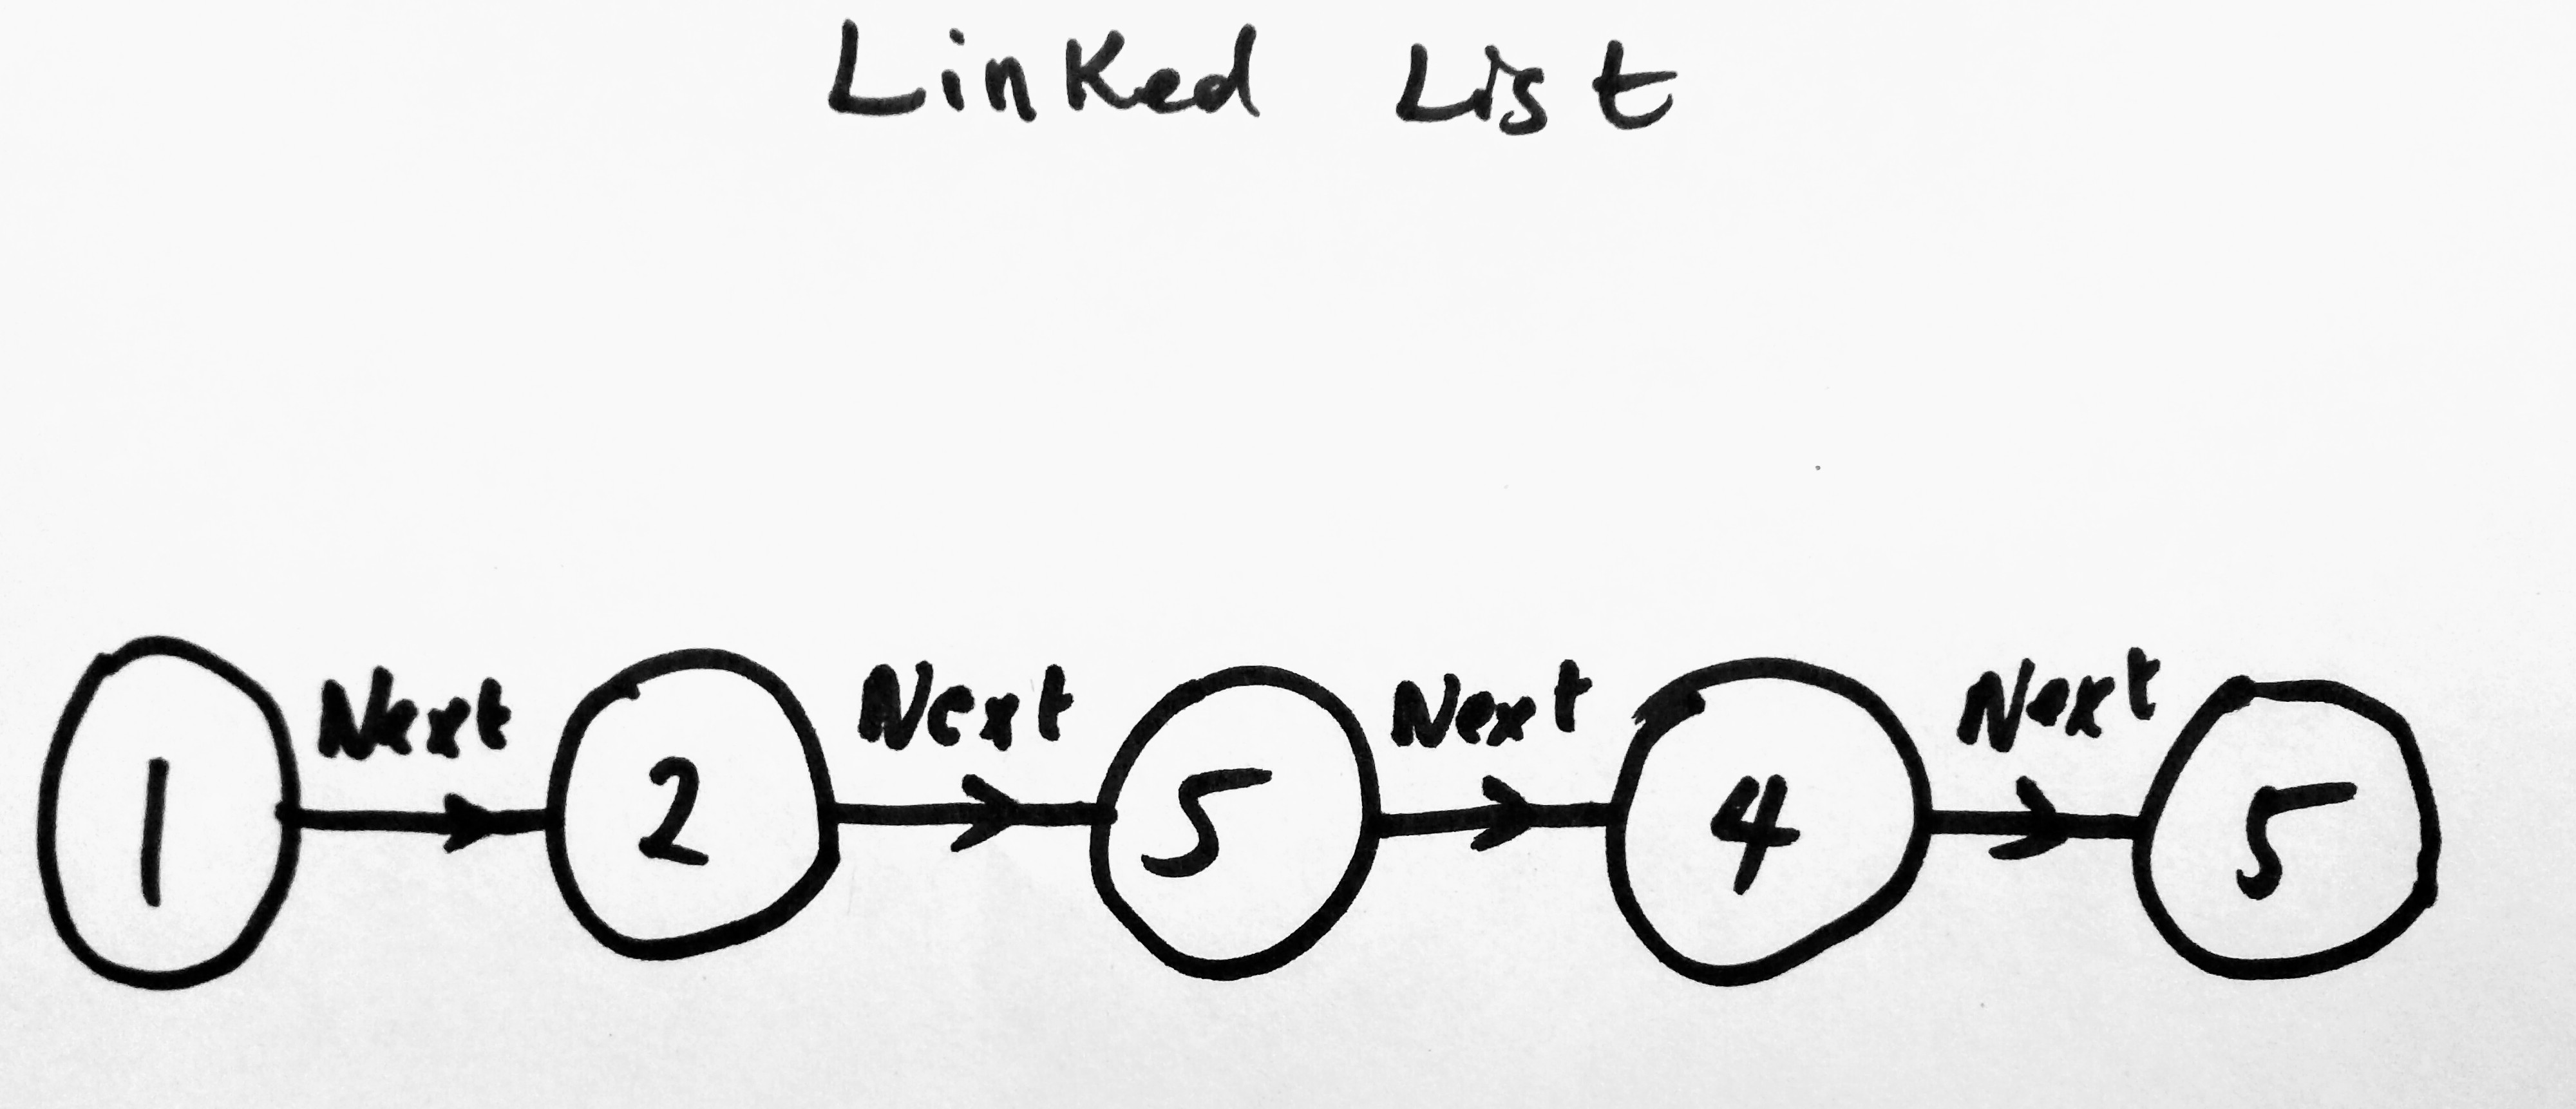 Linked List Diagram